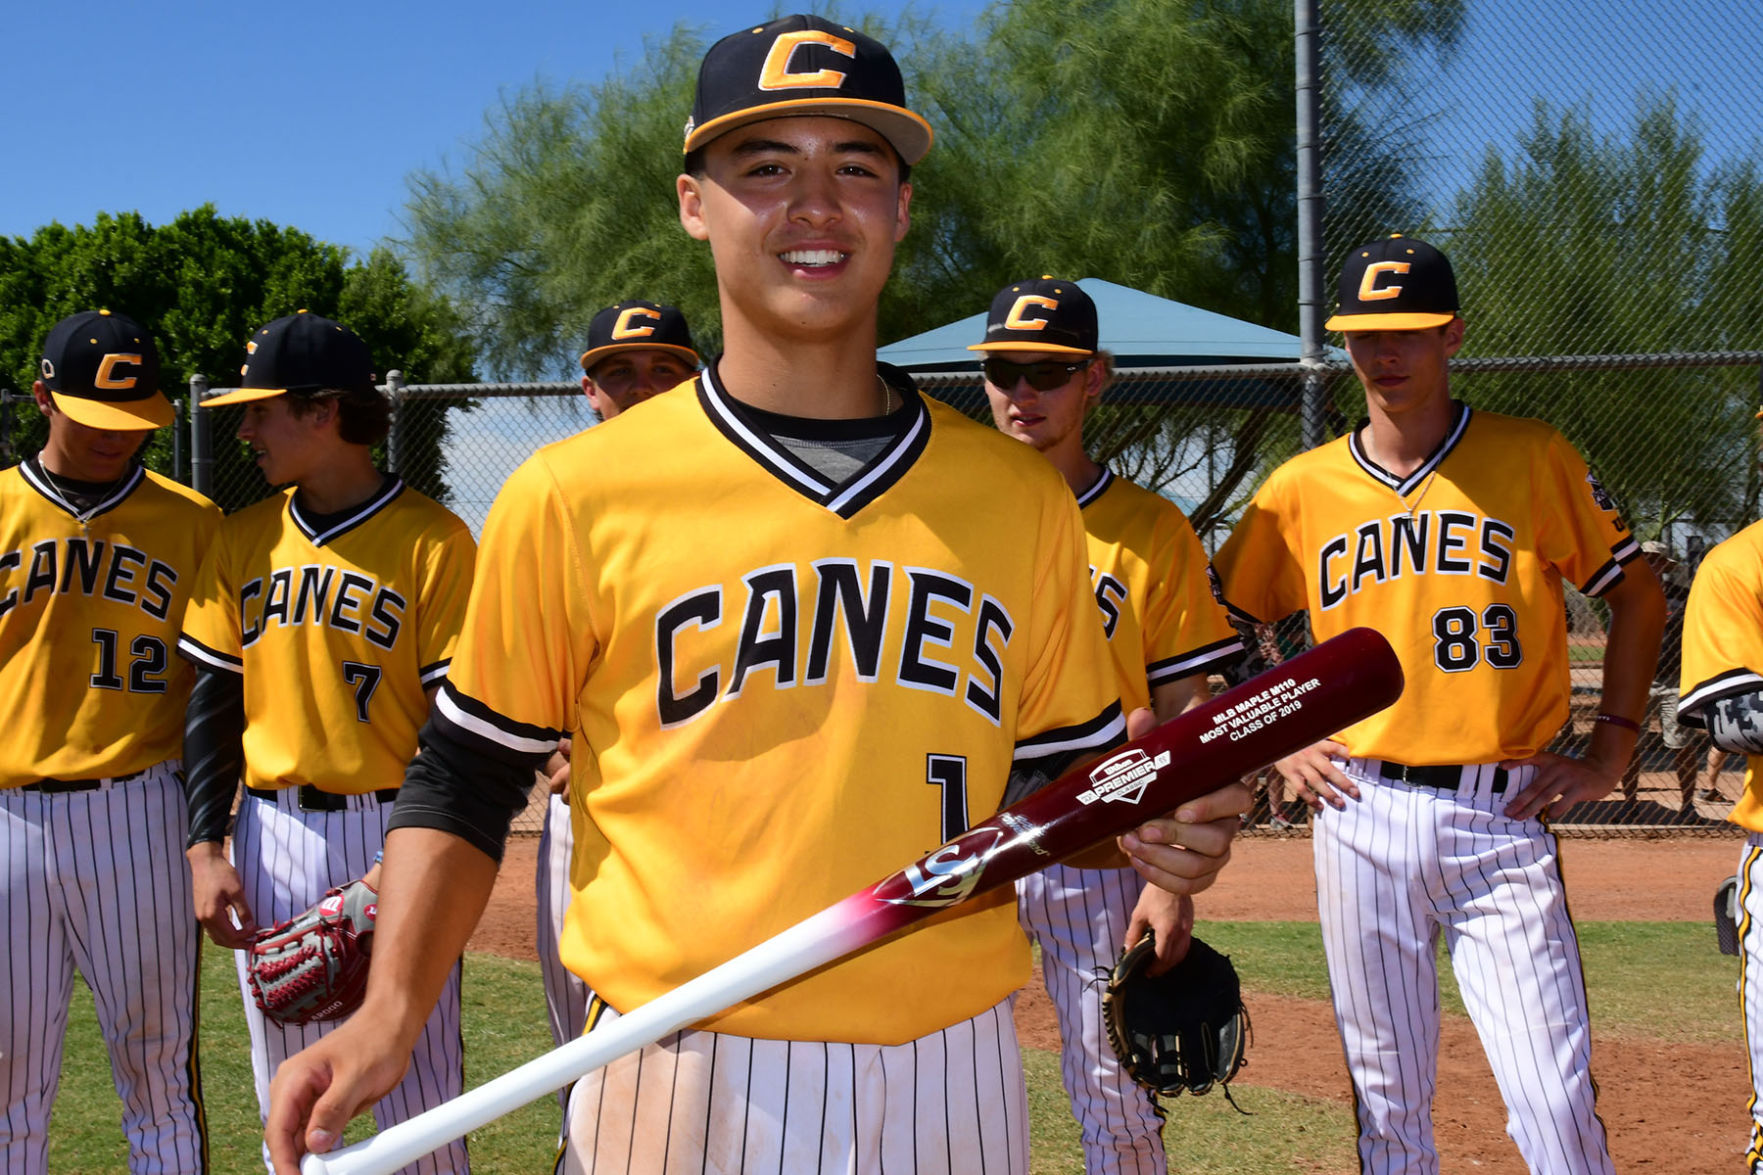 canes baseball uniforms